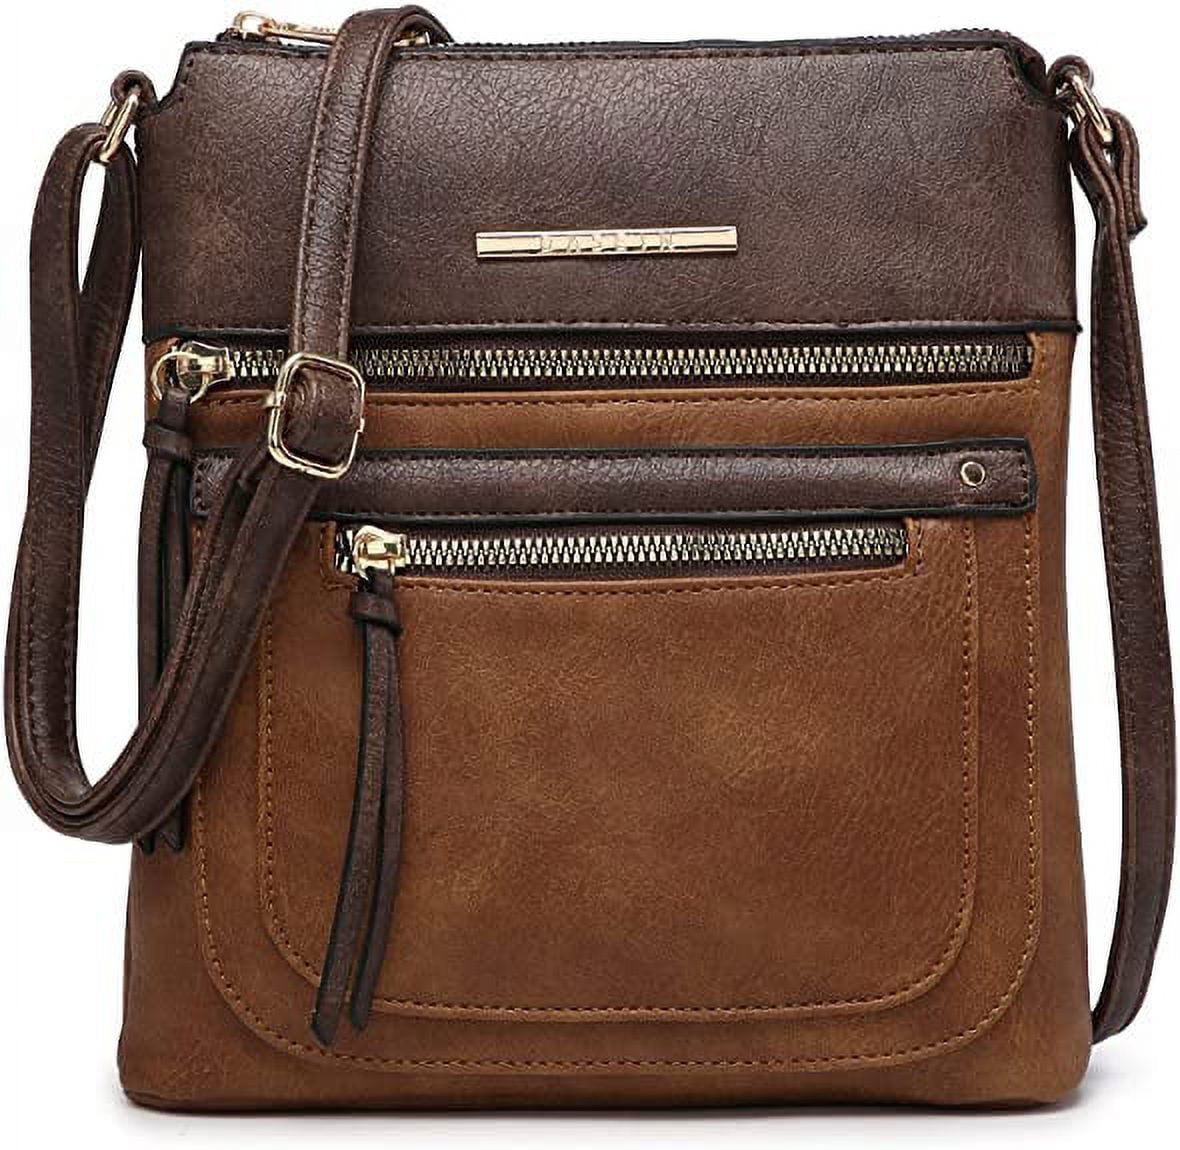 DANDON LLC Purses And Handbags For Women- Crossbody Purse, women's